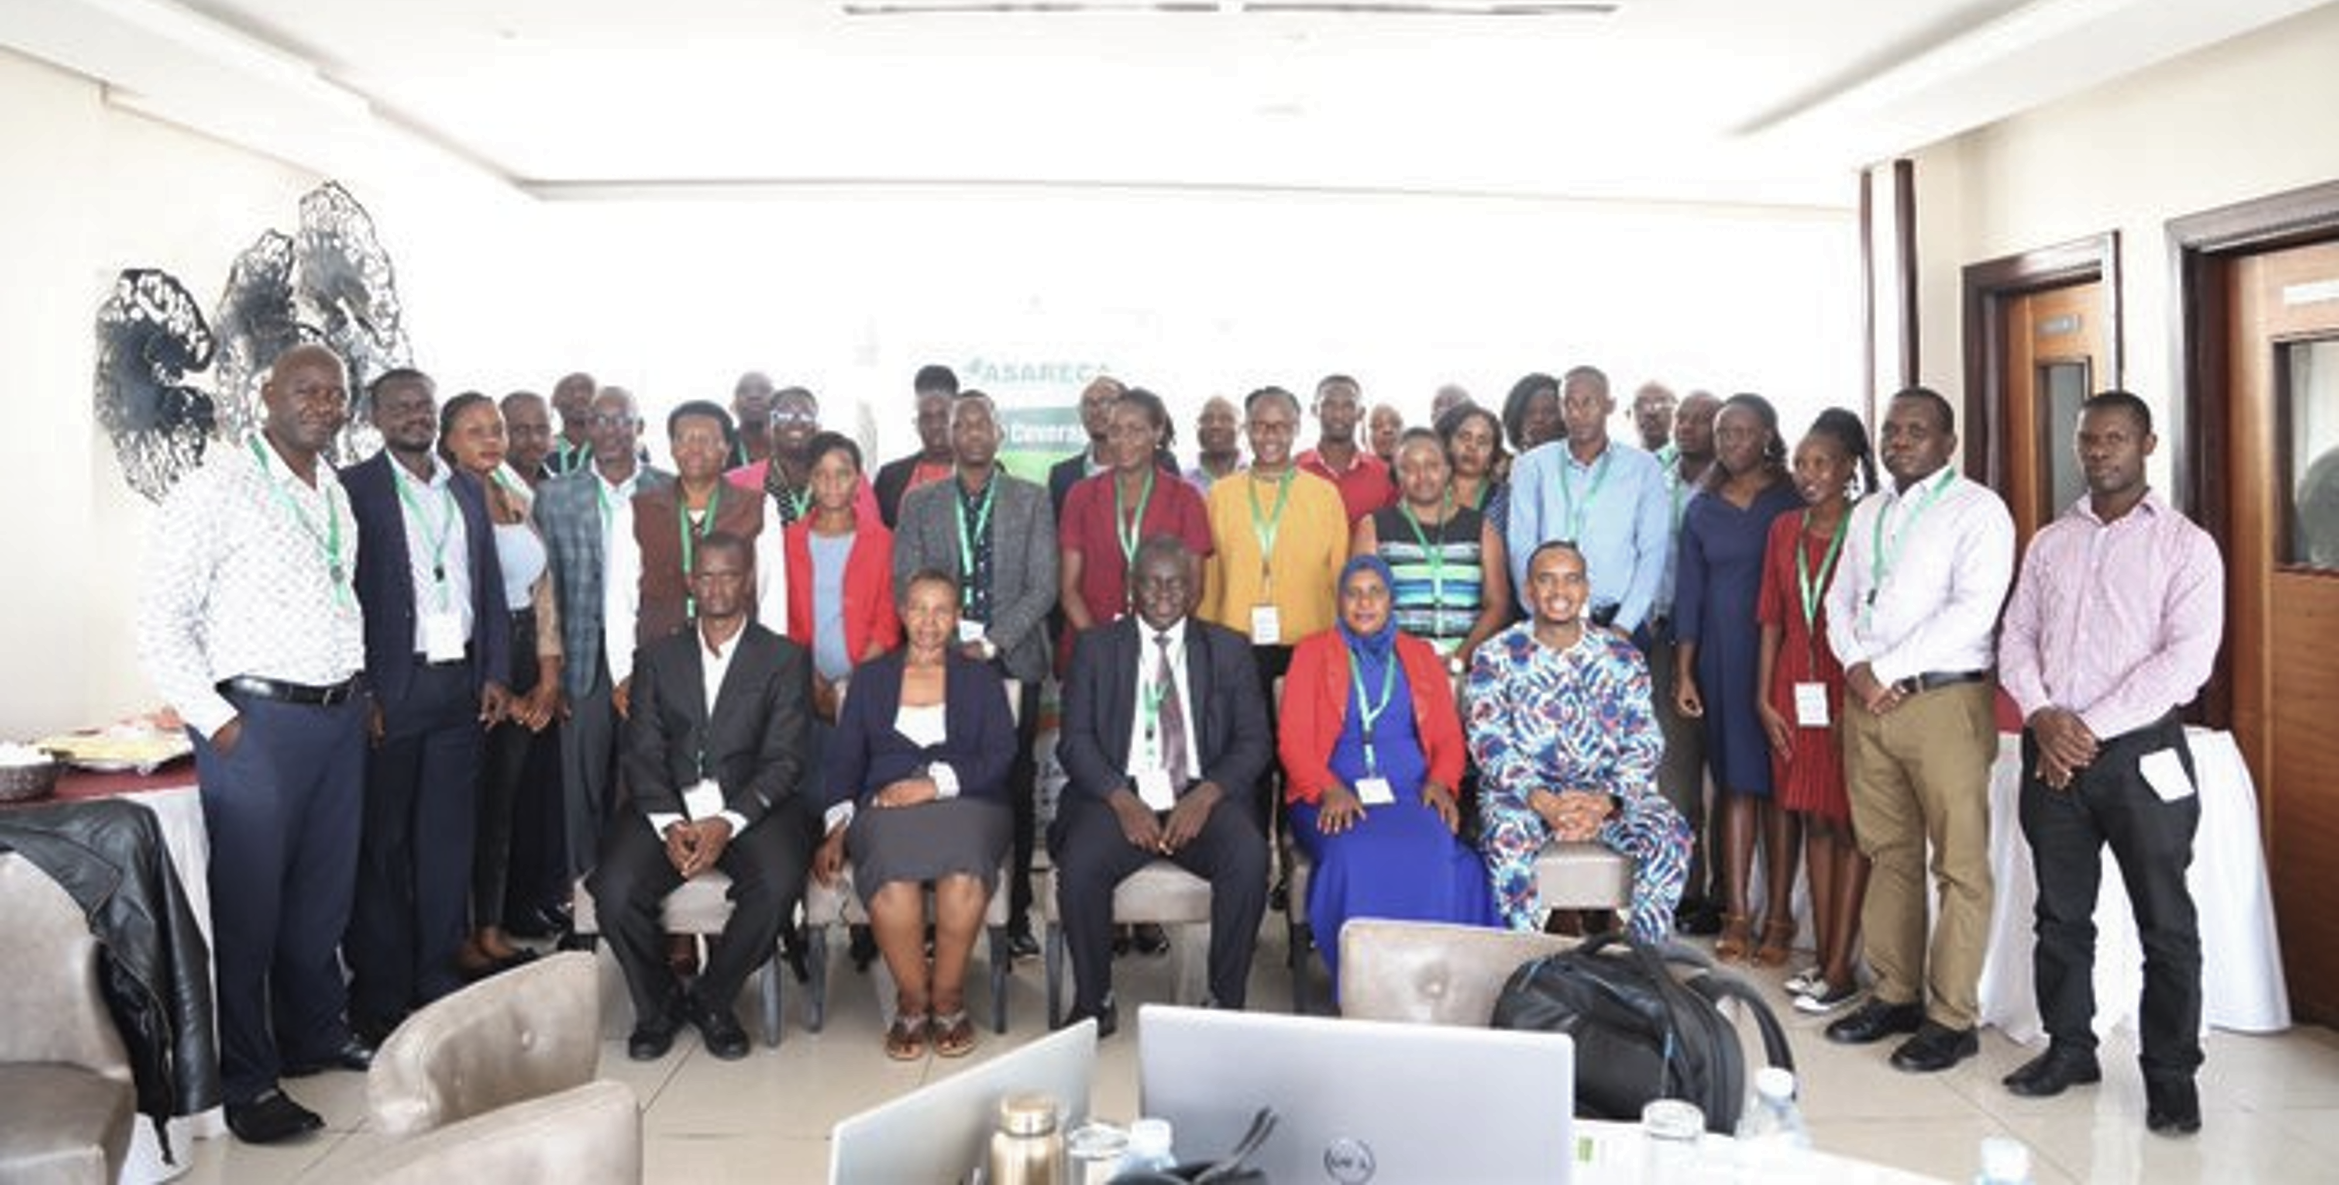 Uganda Consultation session participants